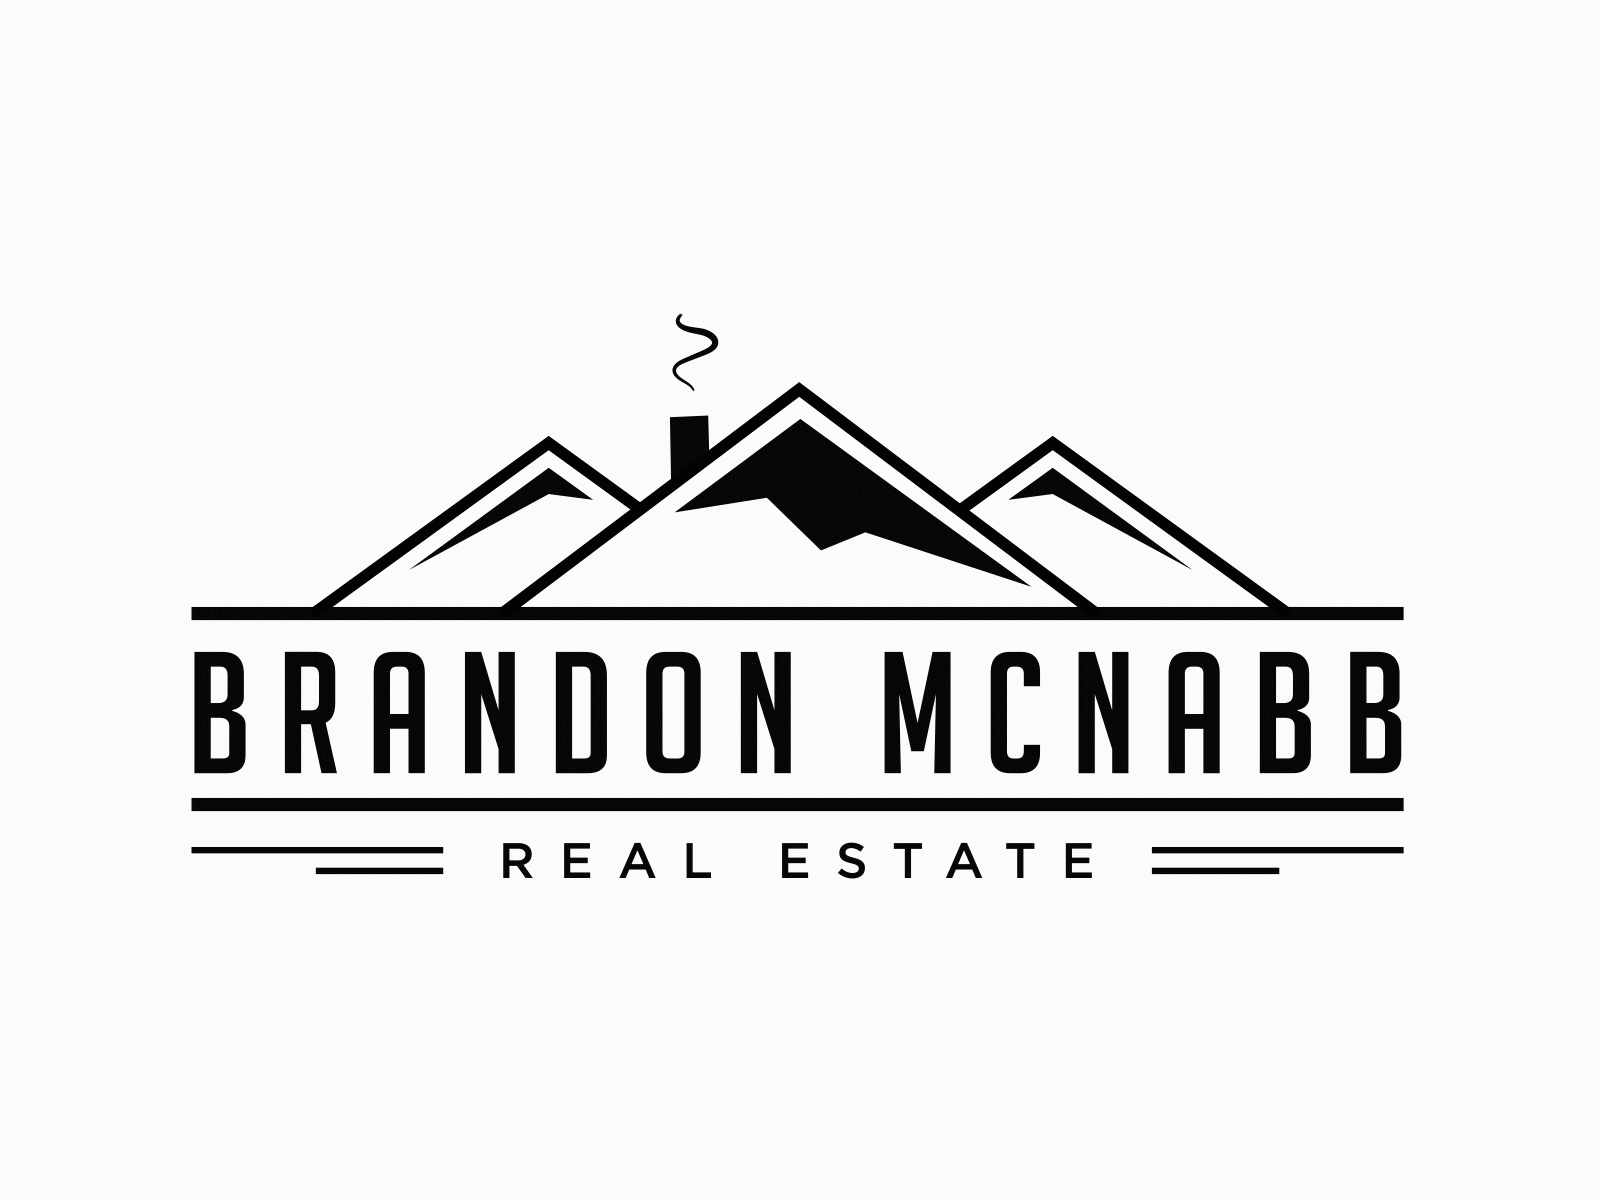 Brandon McNabb Real Estate Logo Animation by Luke Strahm on Dribbble